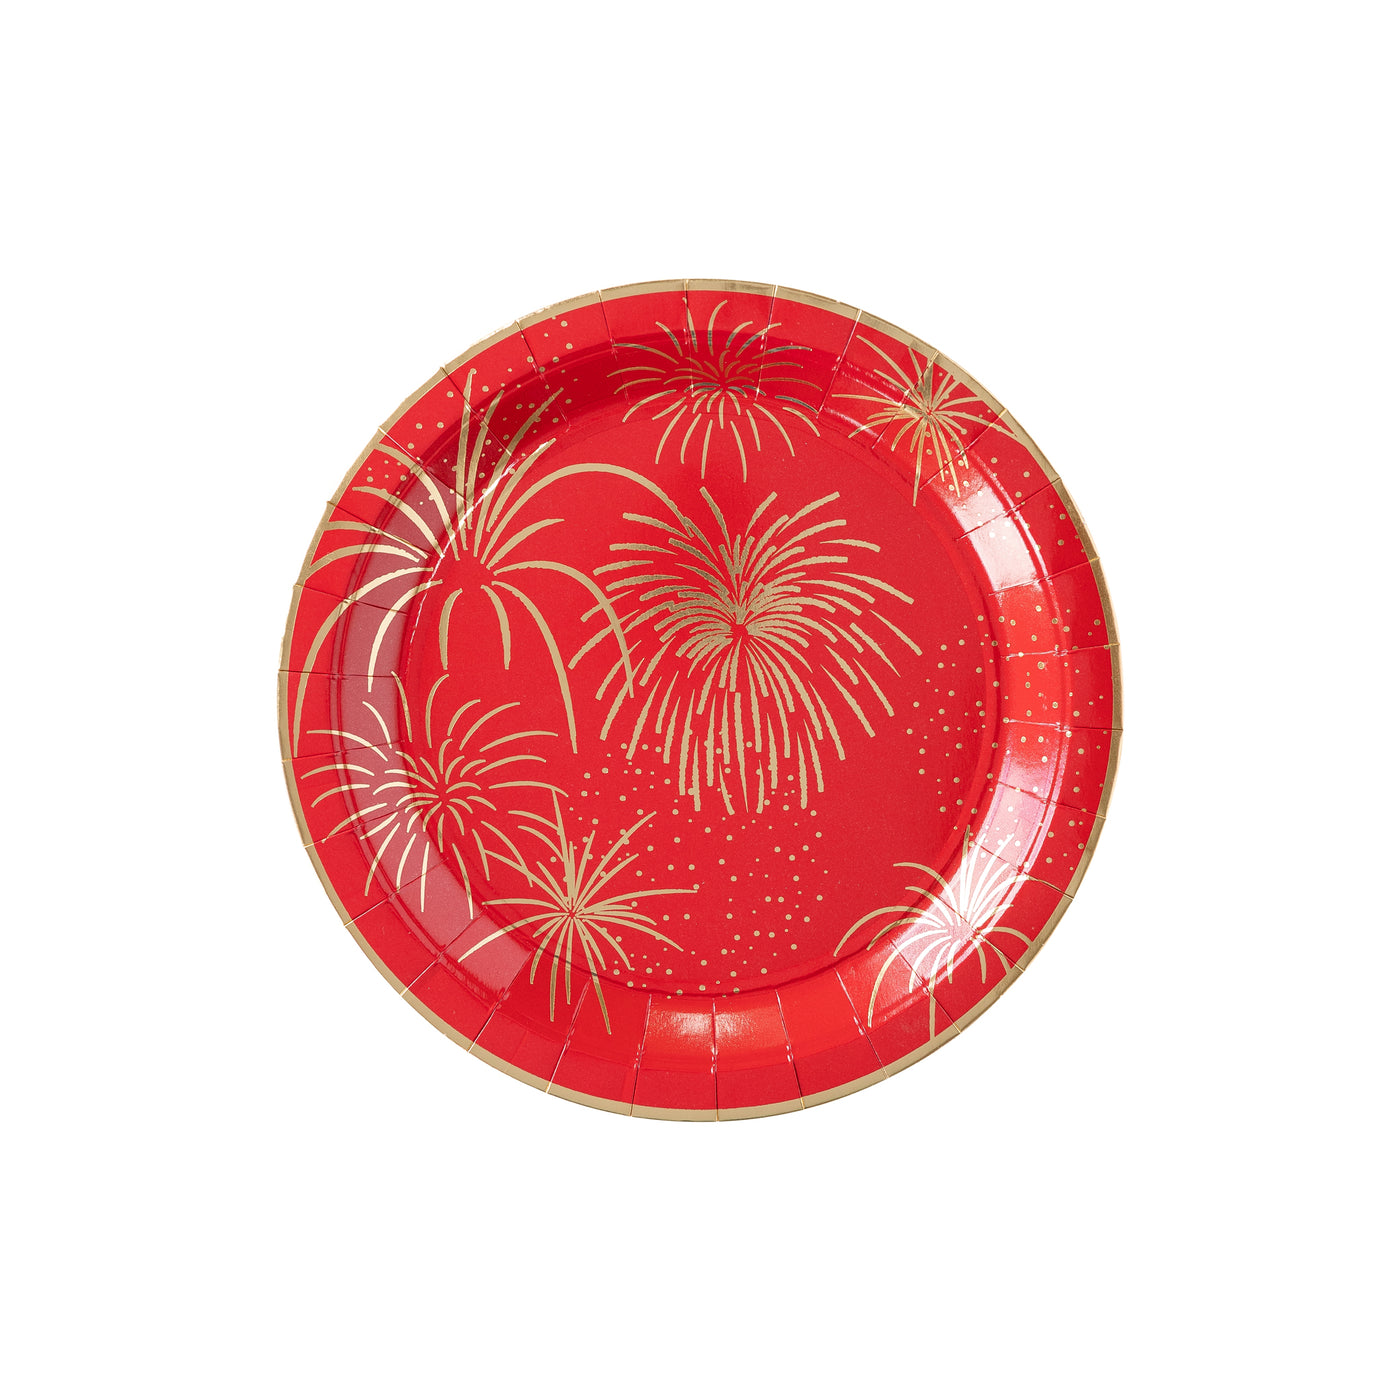 PLNY138 - Lunar New Year Fireworks Plate